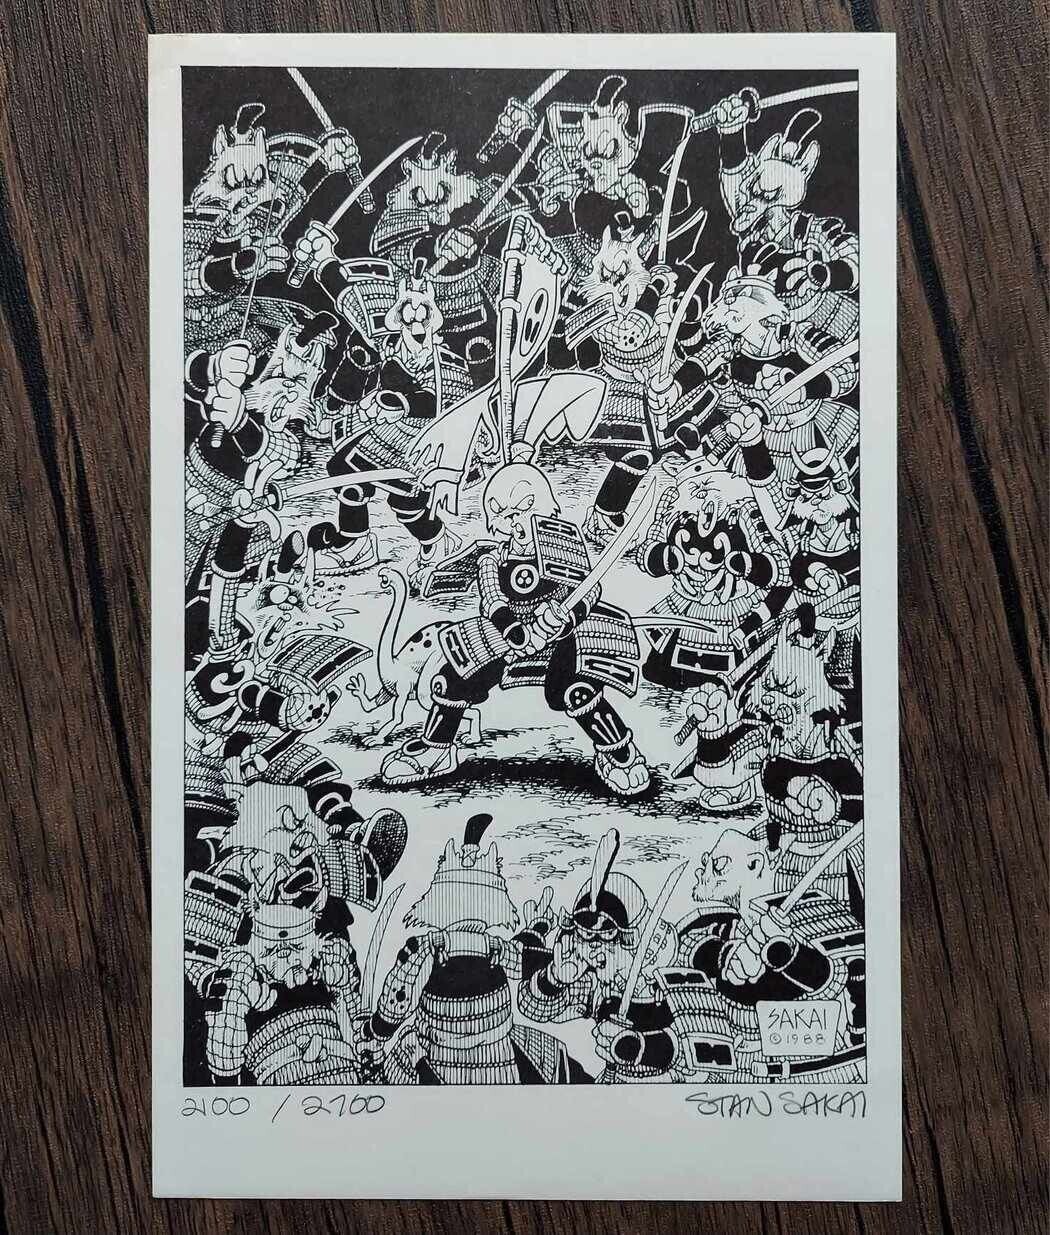 Usagi Yojimbo limited edition art print by Stan Sakai 1988 signed & numbered